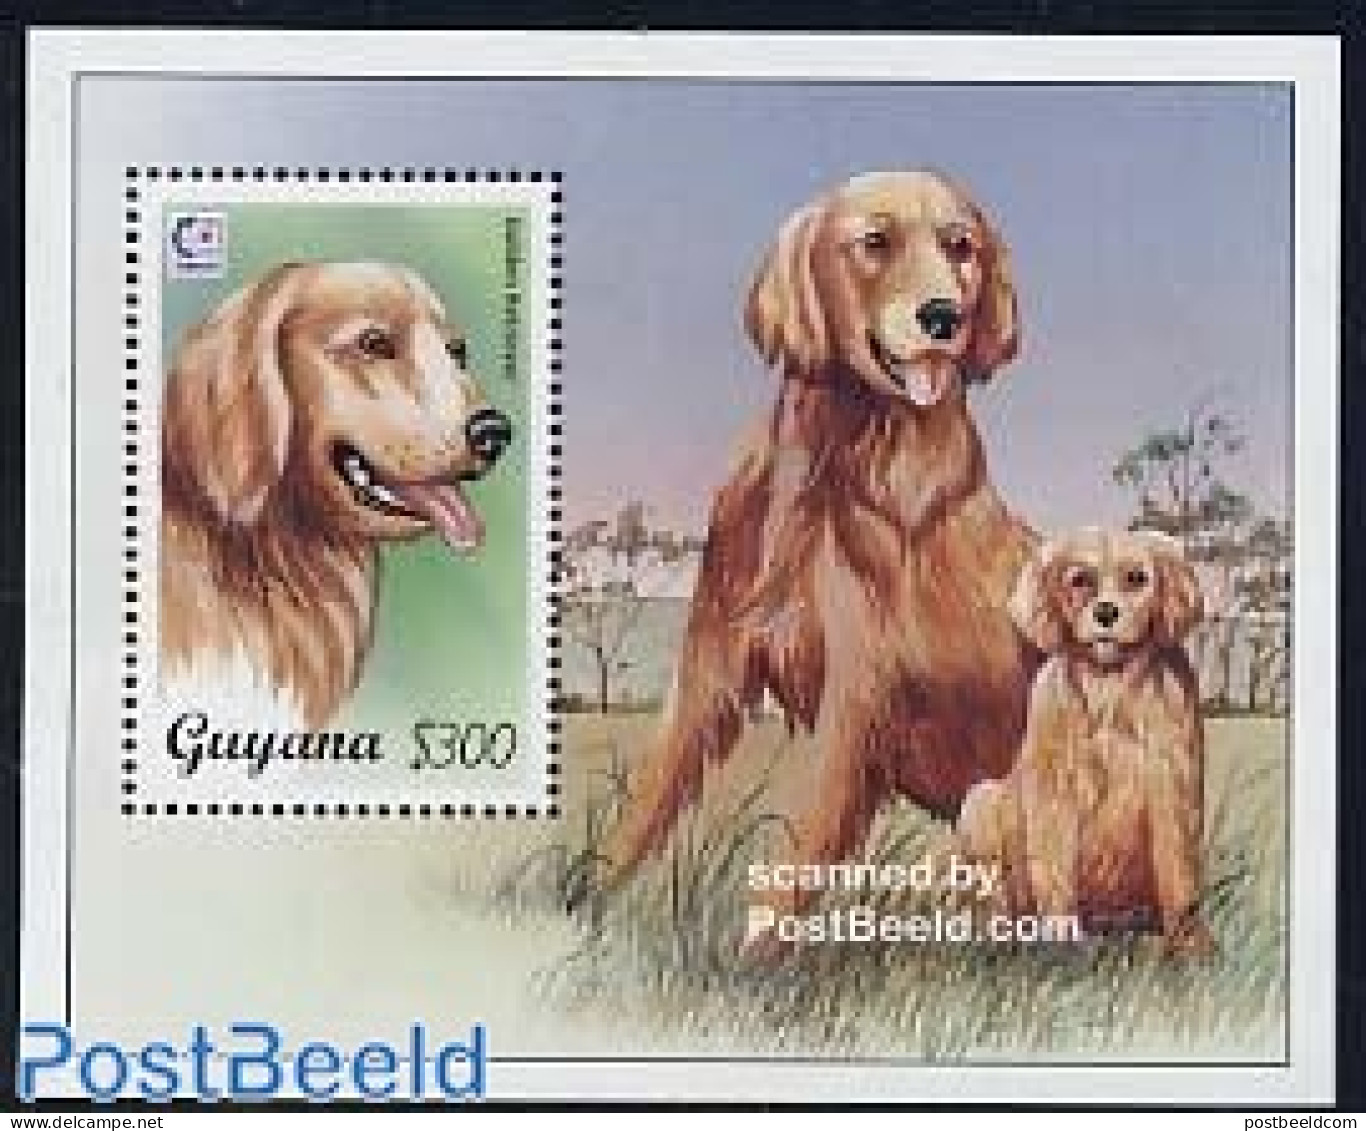 Guyana 1995 Dogs, Singapore S/s, Mint NH, Nature - Dogs - Guyana (1966-...)